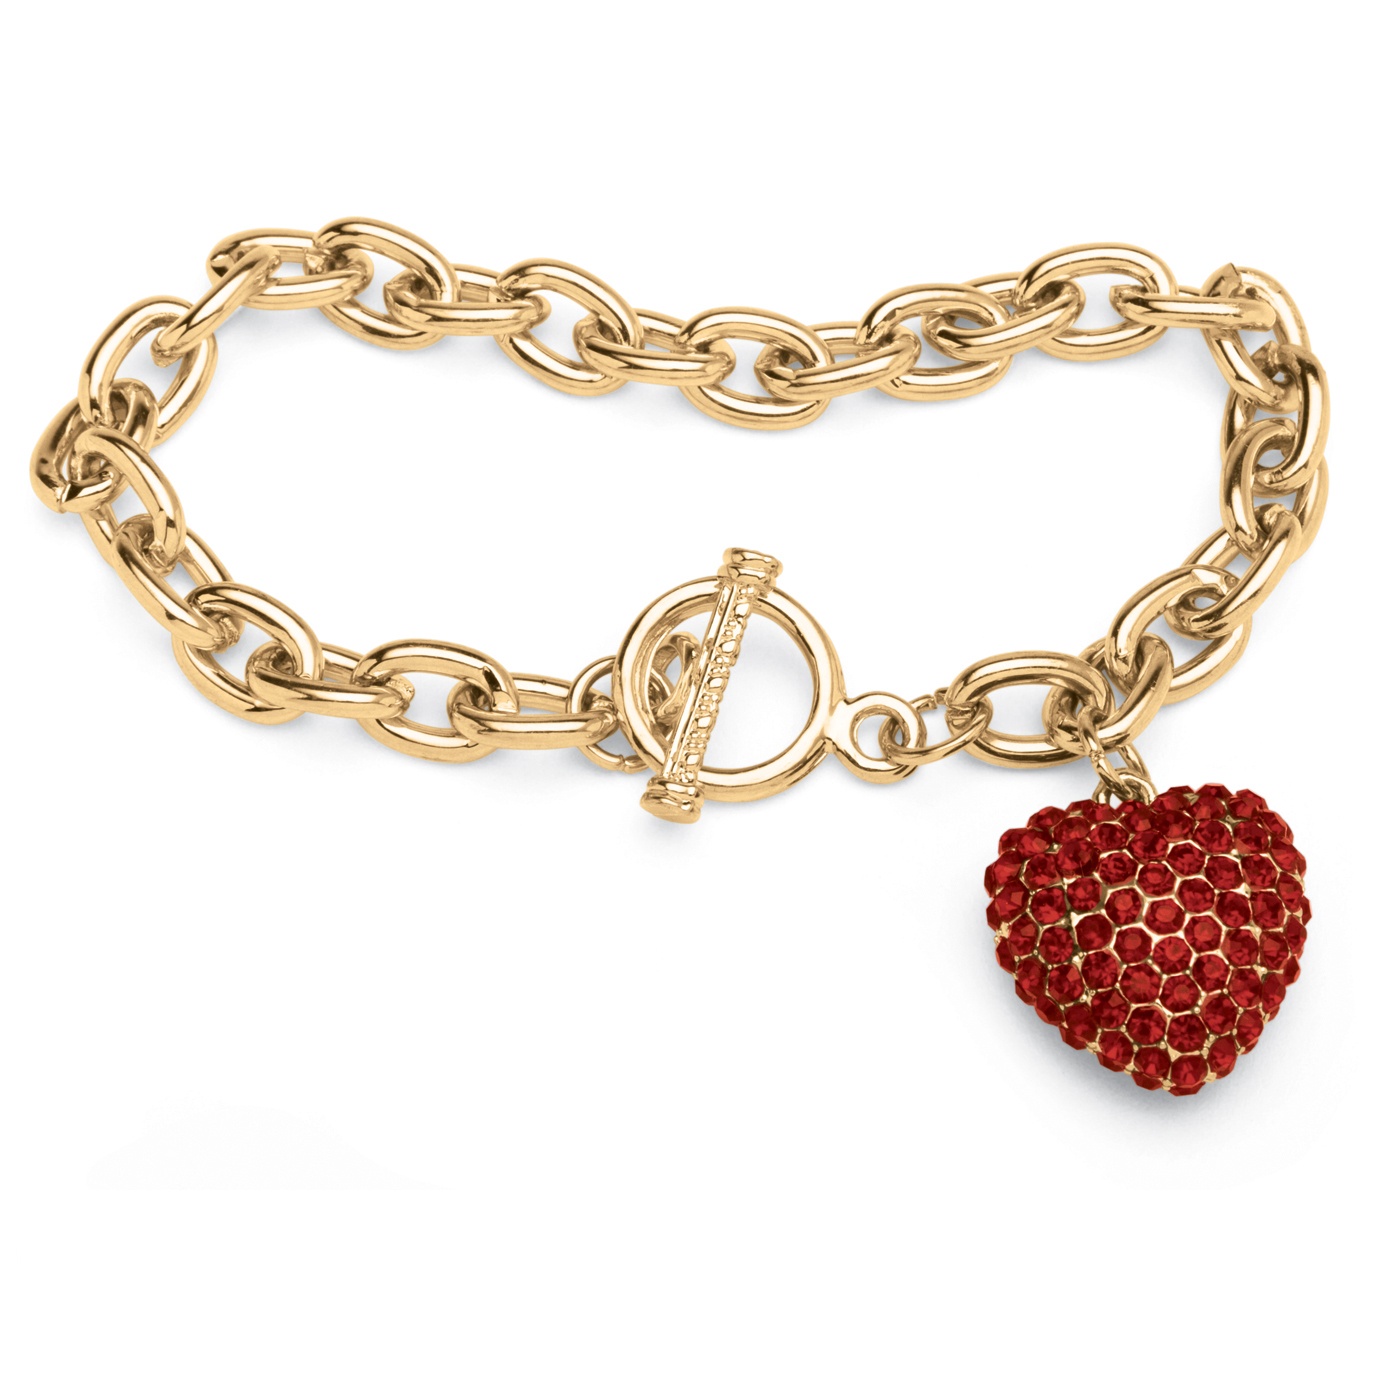 PalmBeach Jewelry Crystal Heart Charm Birthstone Toggle Bracelet in Yellow Gold Tone